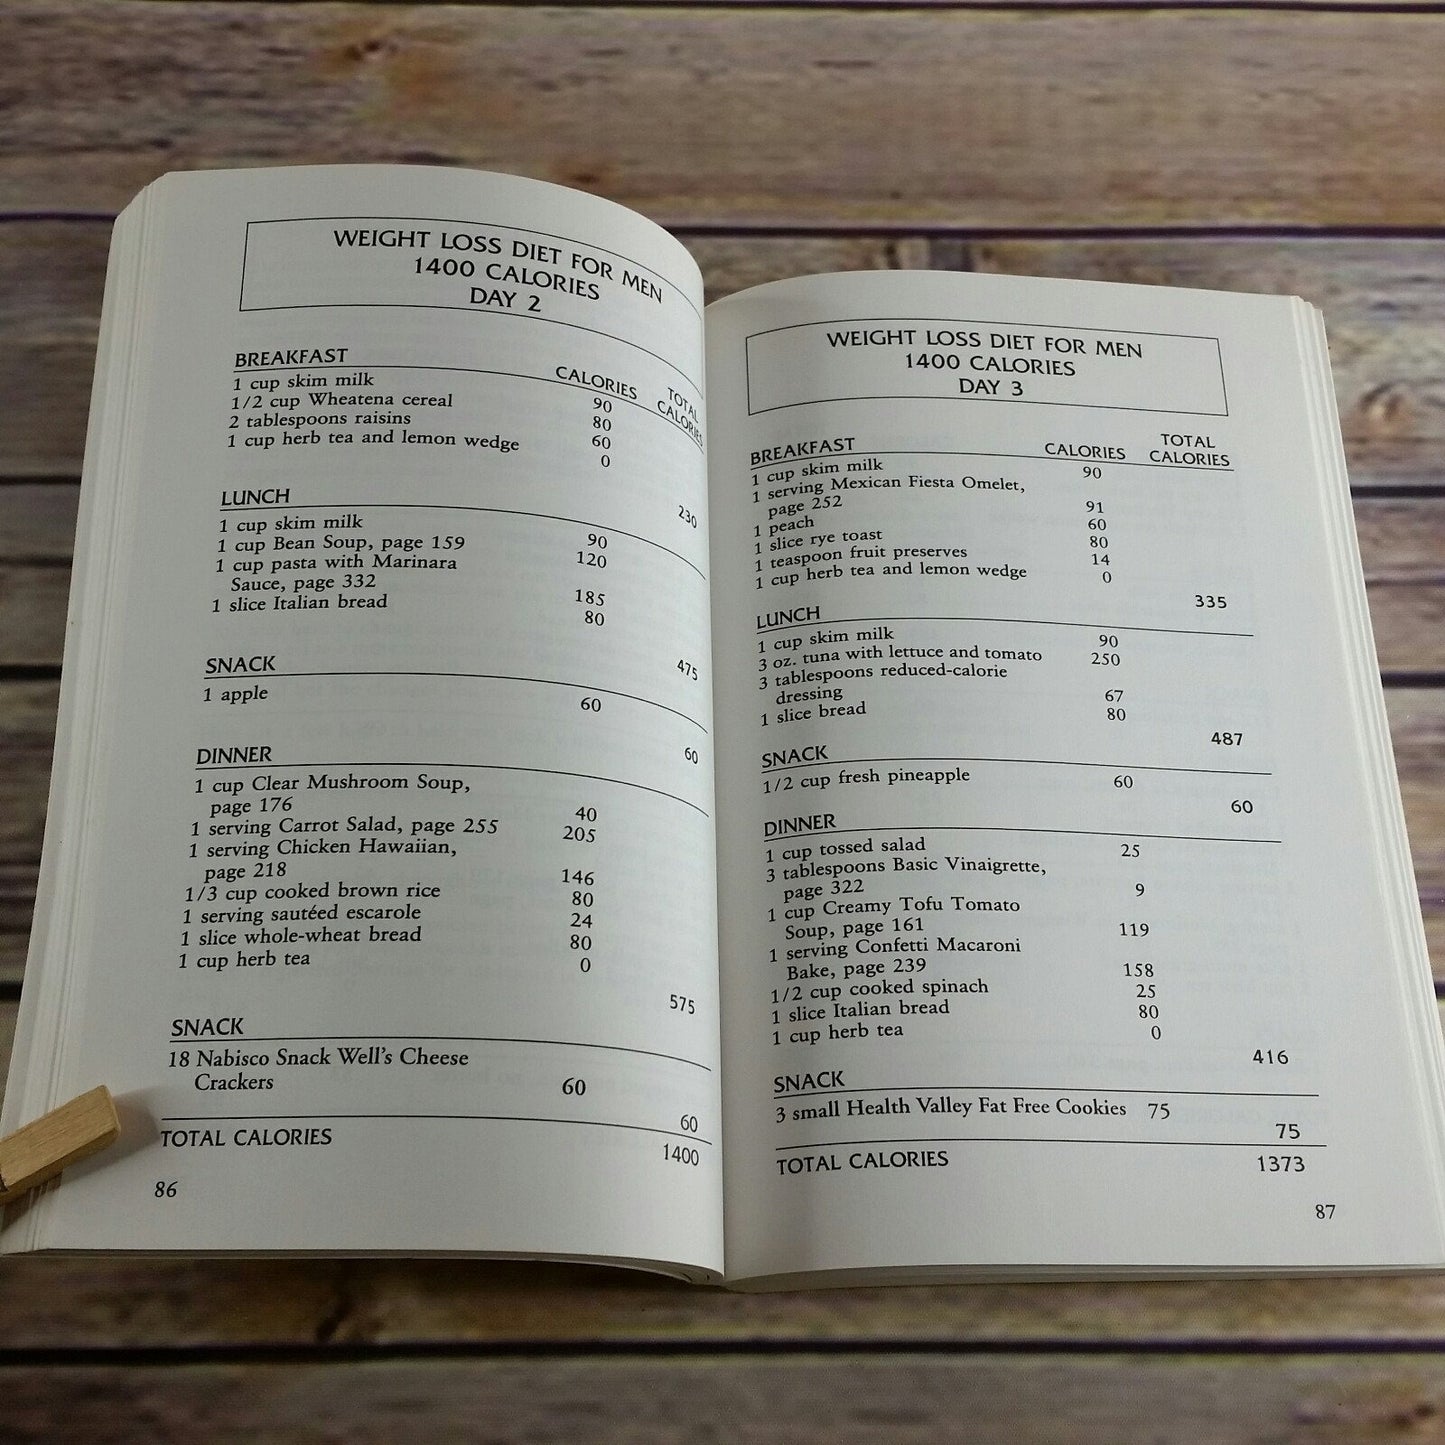 Vintage Cookbook 200+ Recipes for Longer Life 1994 Gloria Rose Paperback Gourmet Long Life Cooking Schools Director